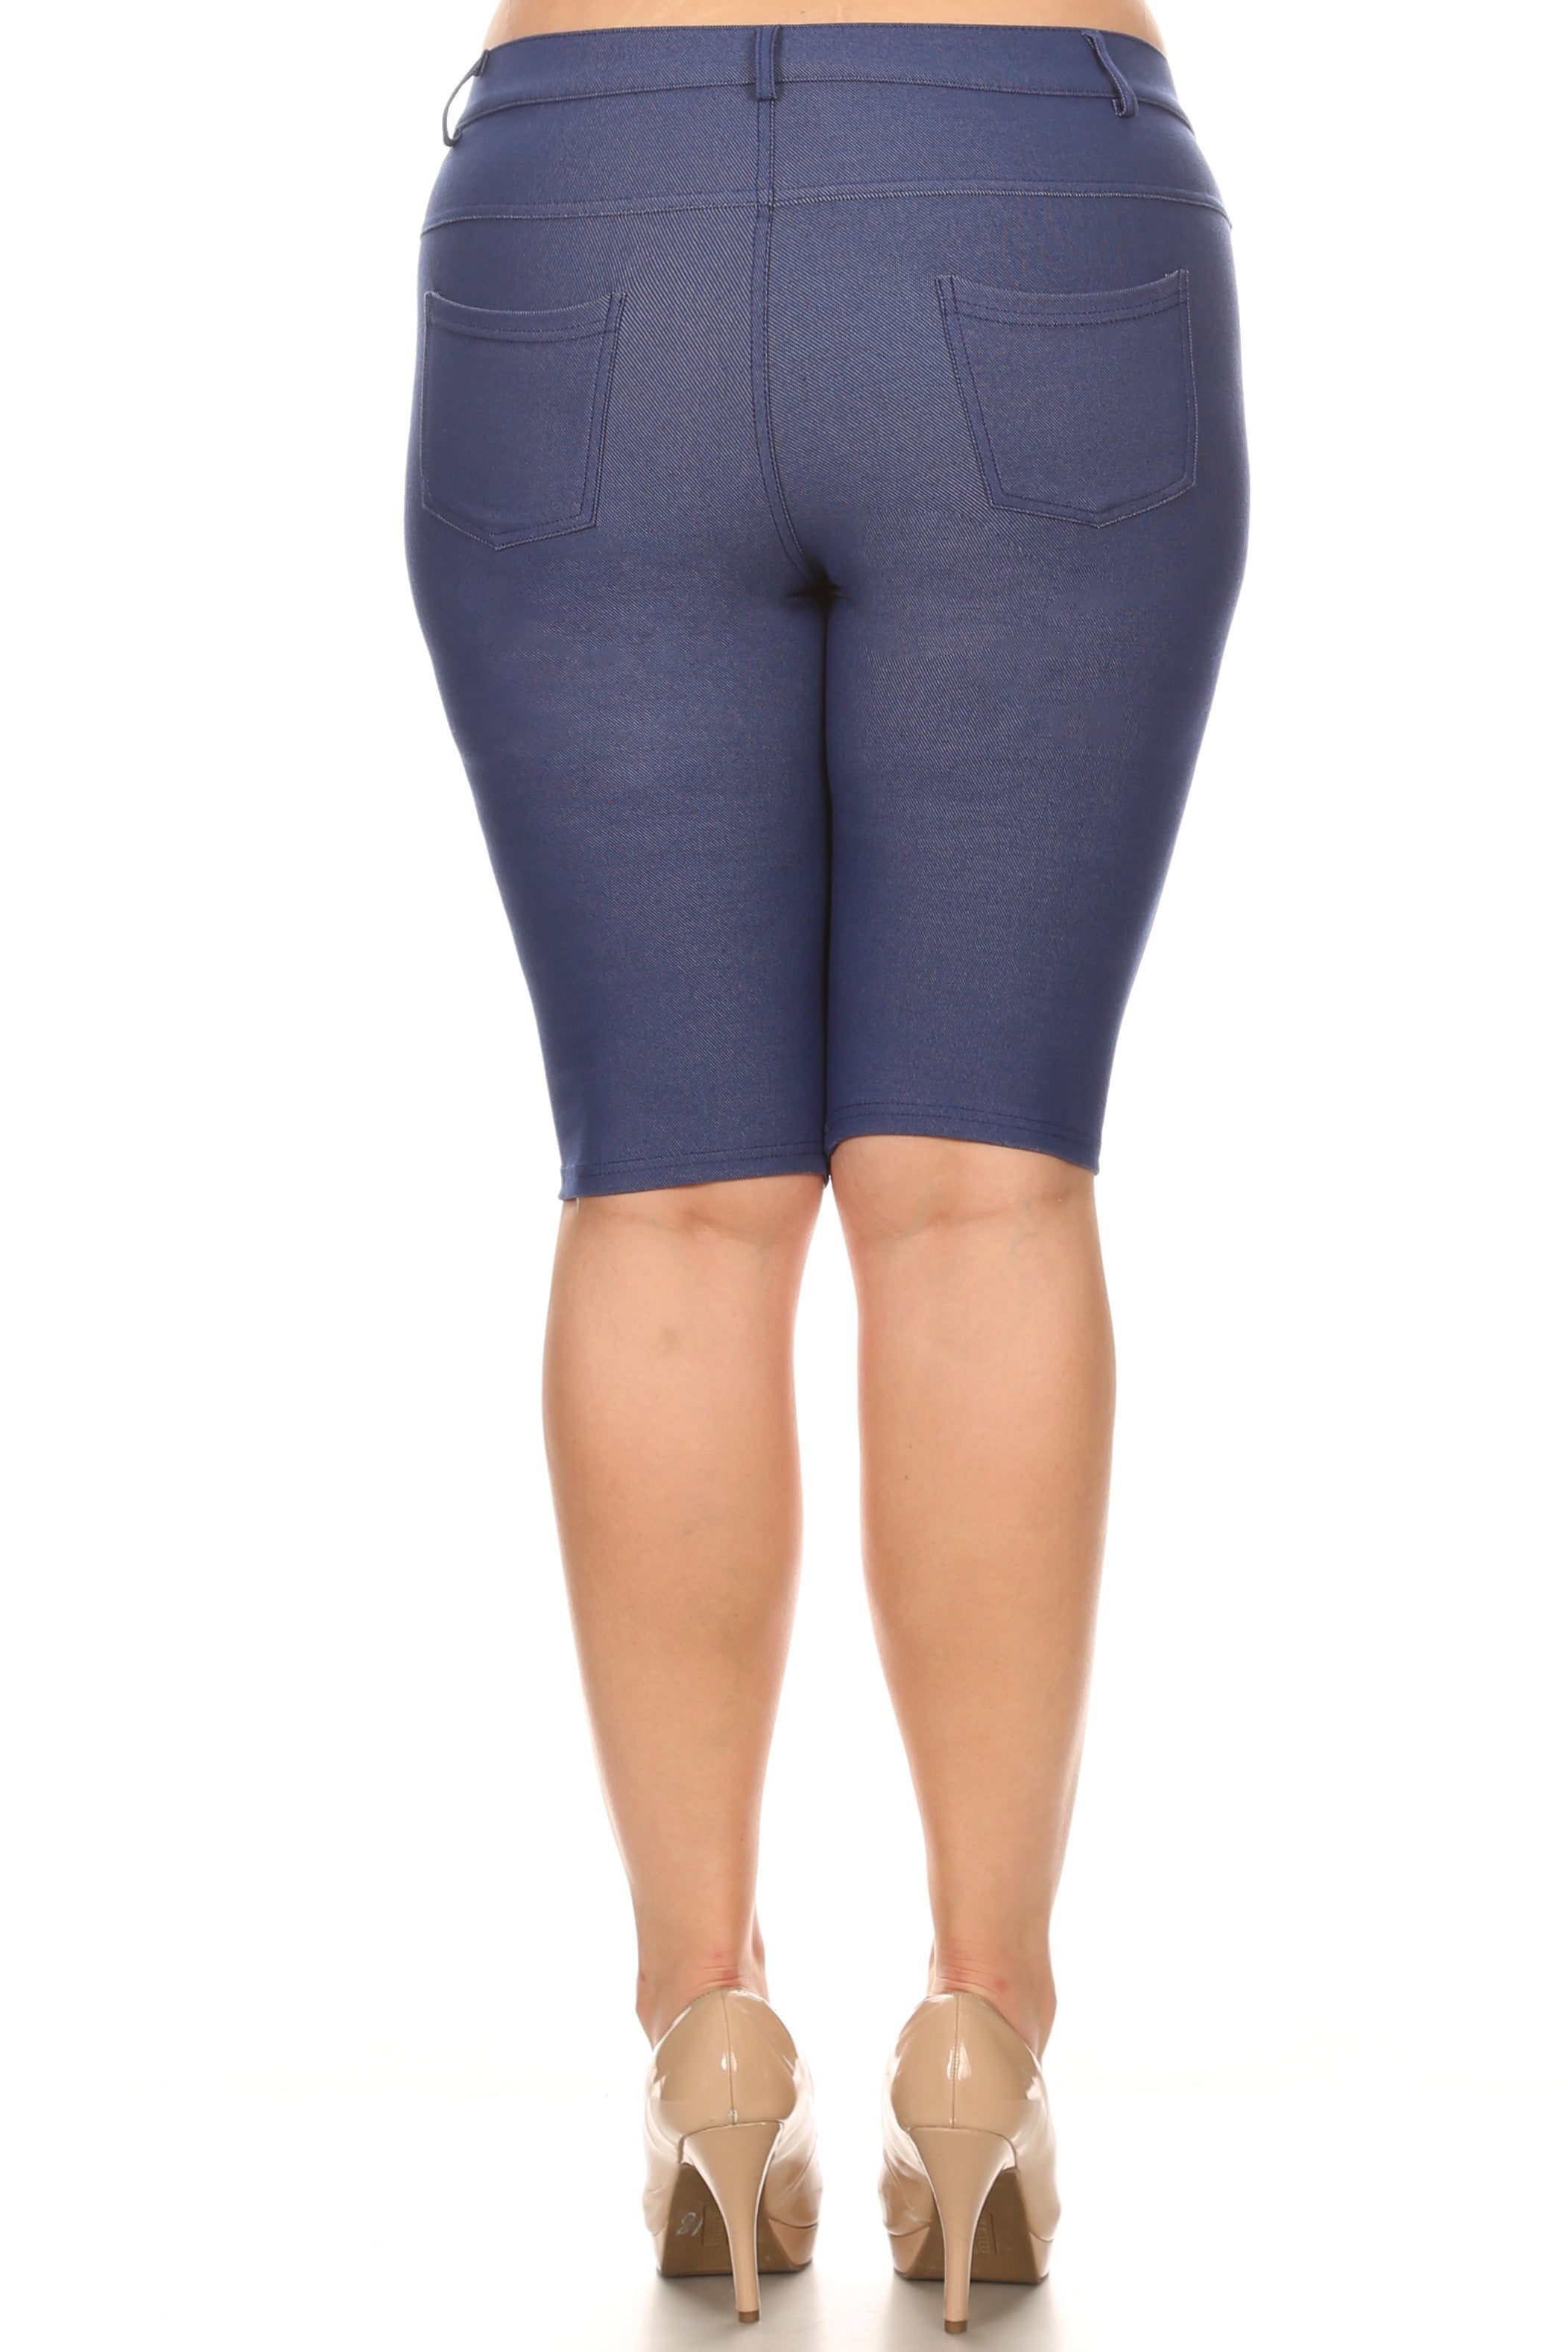 Plus Size Solid Colored Denim Style Bermuda Shorts Black / XL | Women | by ICONOFLASH